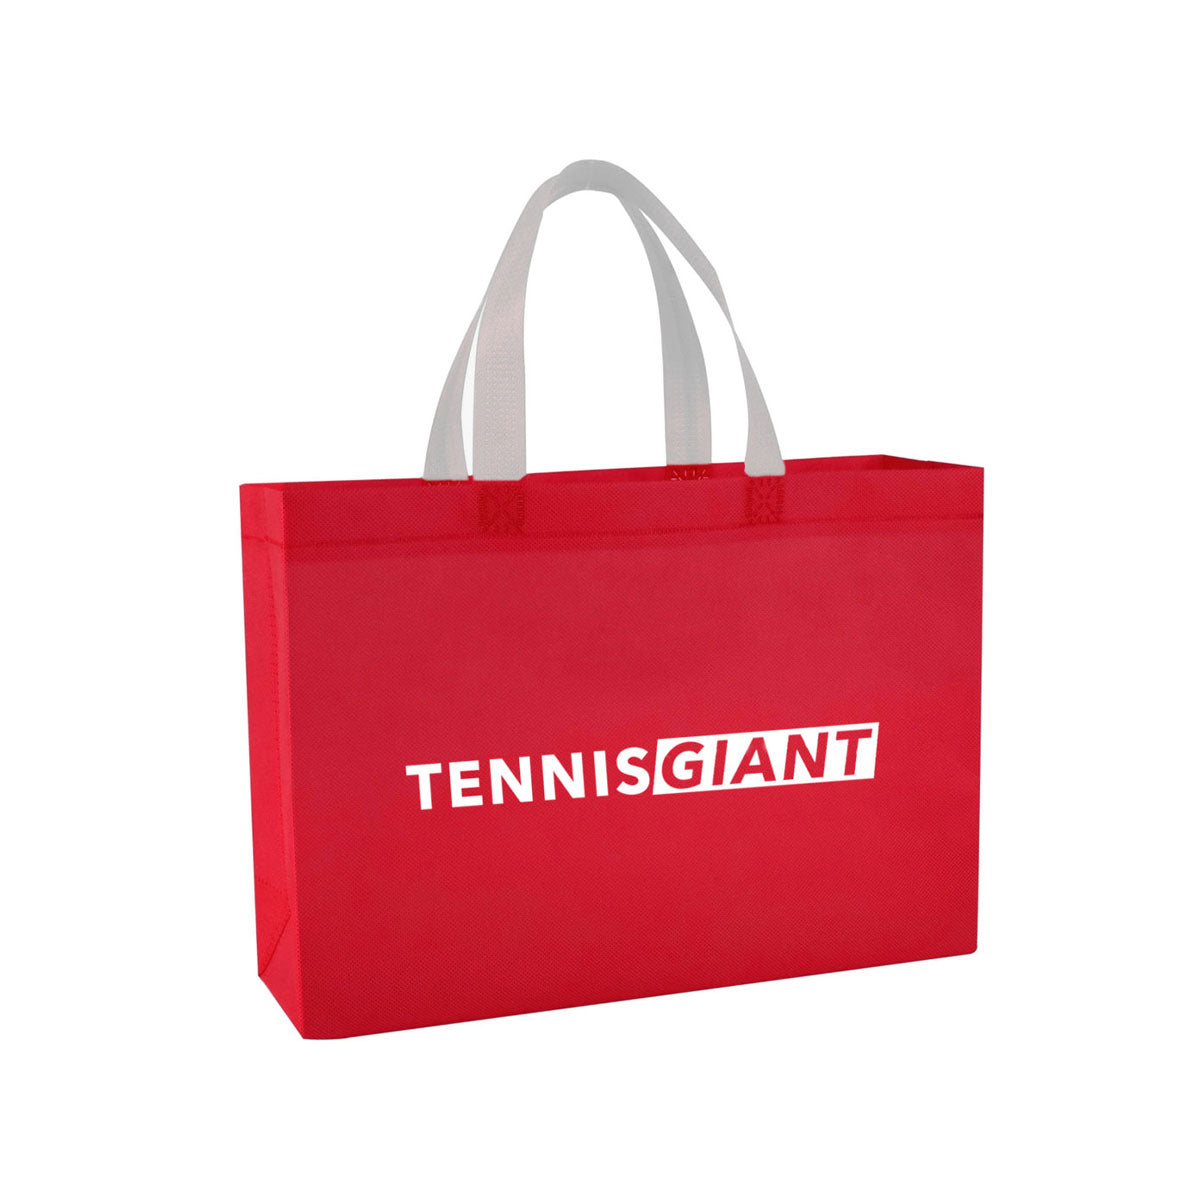 Tennis Giant Reuseable Bag - Red/White